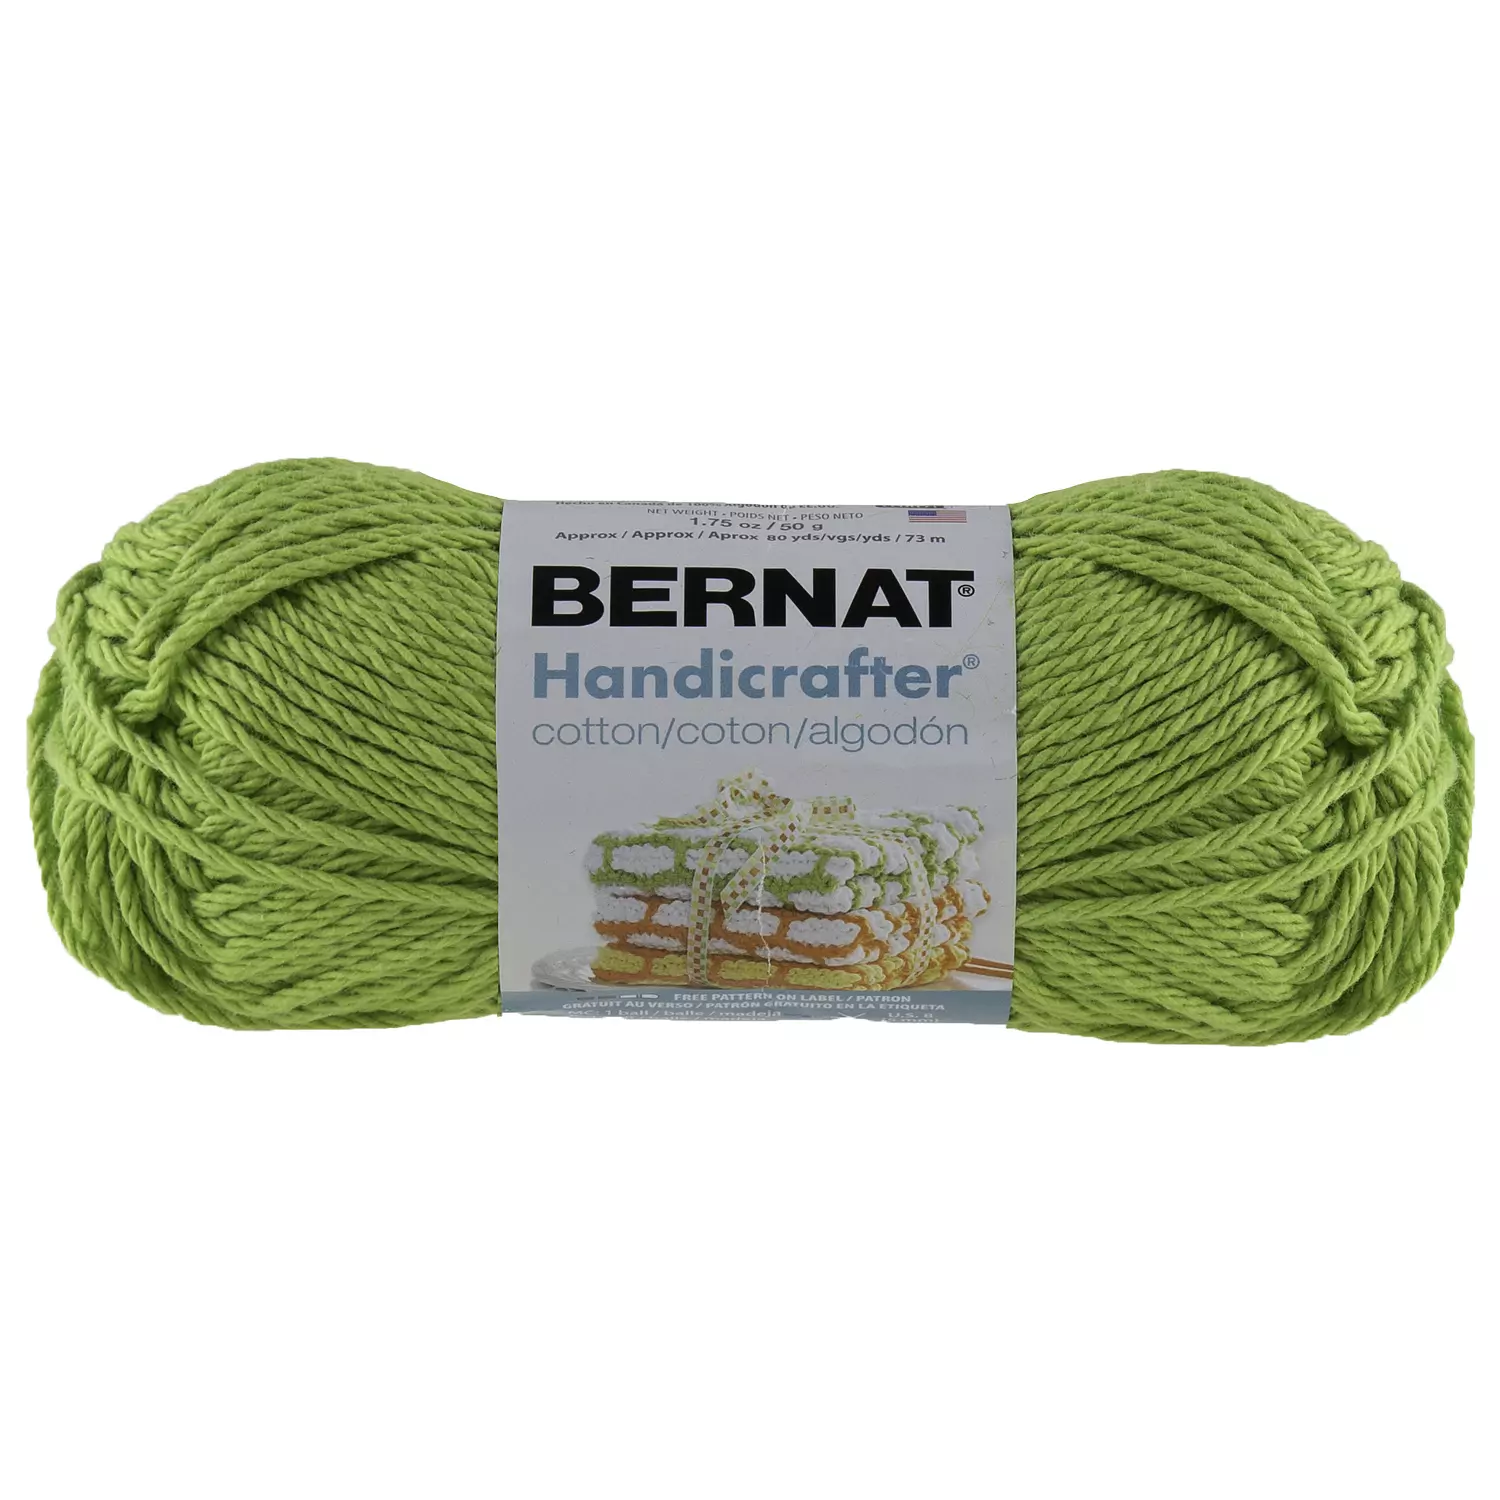 Bernat Handicrafter - Laine en coton, vert chaud